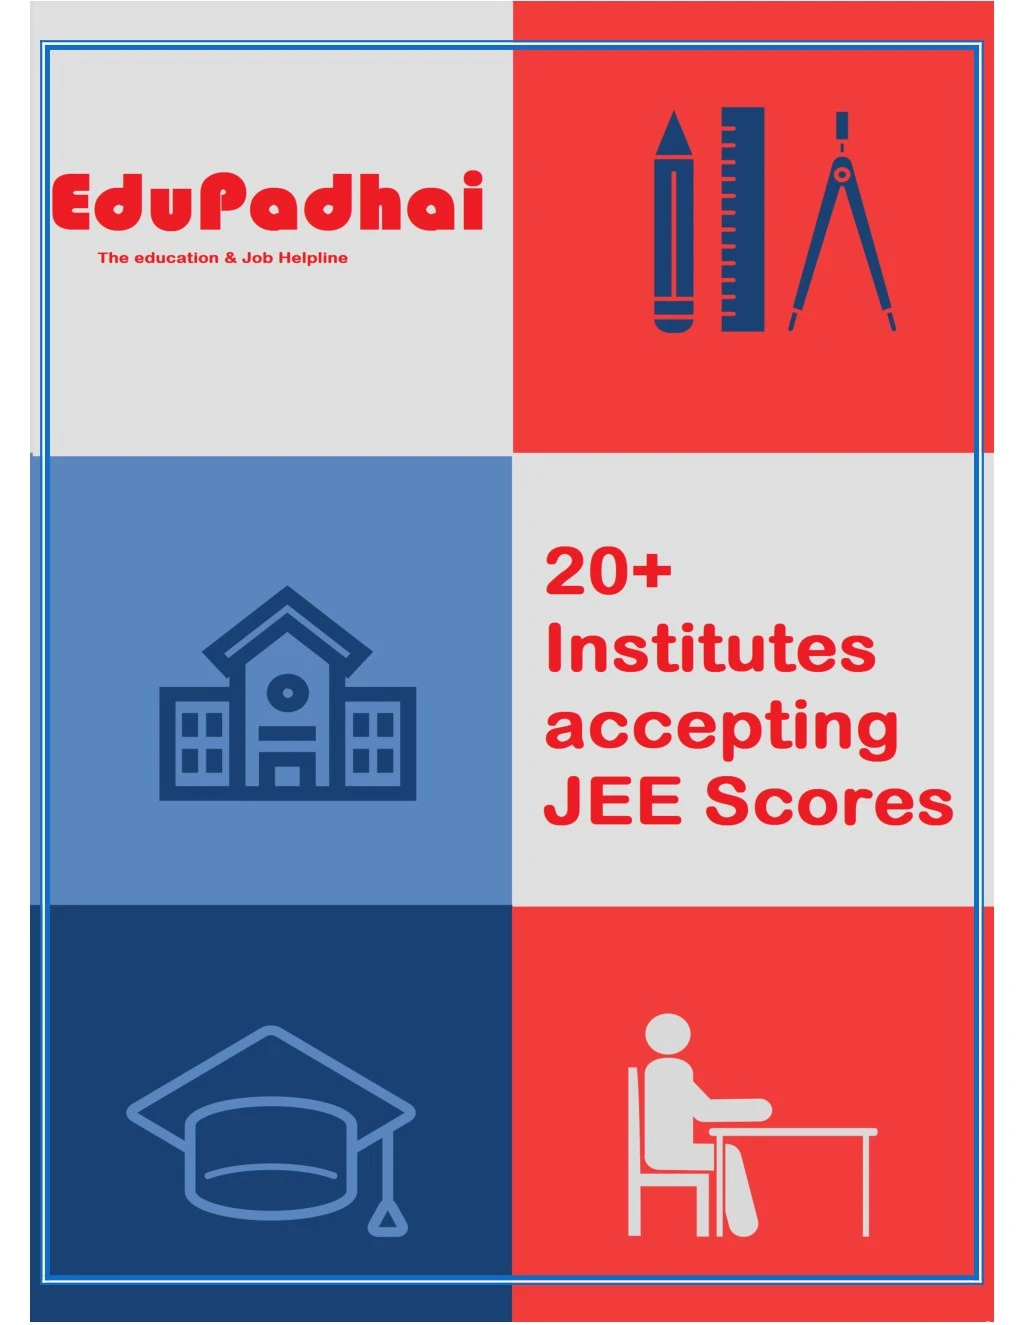 edupadhai edupadhai the education jobs helpline